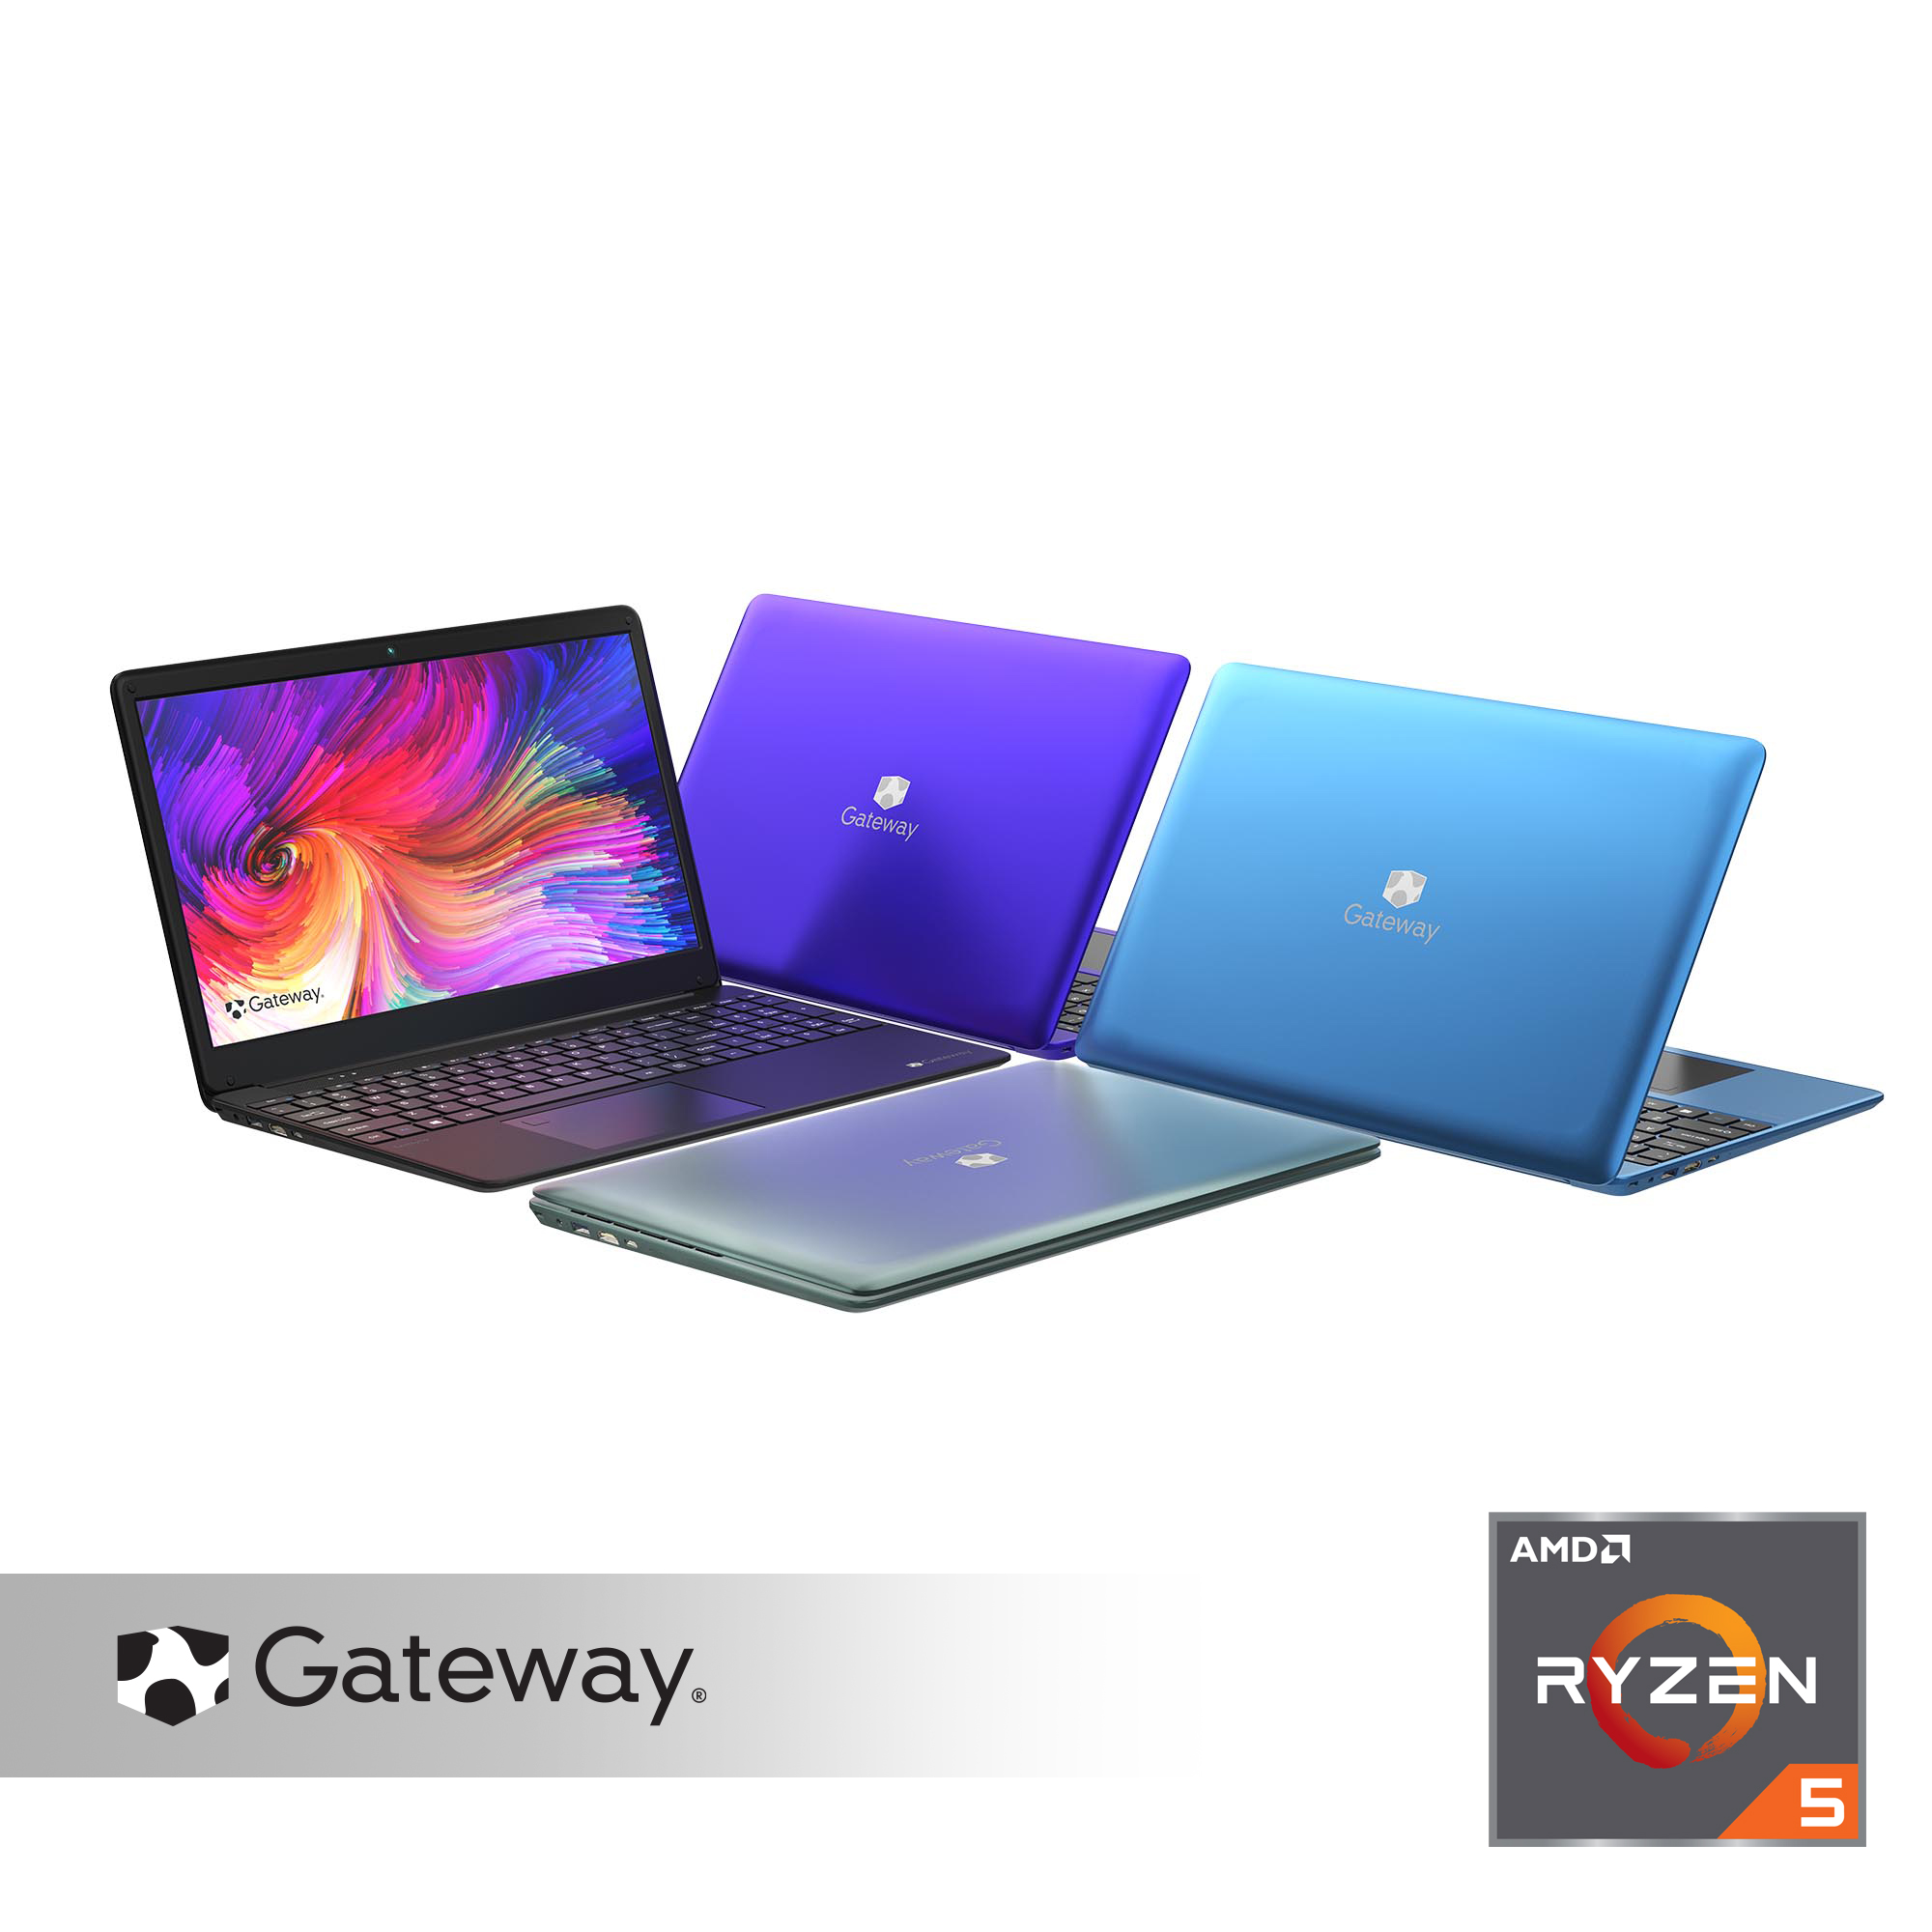 Gateway 15.6" FHD Ultra Slim Notebook, AMD Ryzen™ 5 3450U, 8GB RAM, 256GB SSD, Tuned by THX™ Audio, Fingerprint Scanner, 1MP Webcam, HDMI, Cortana, Windows 10 Home, Green - image 1 of 2